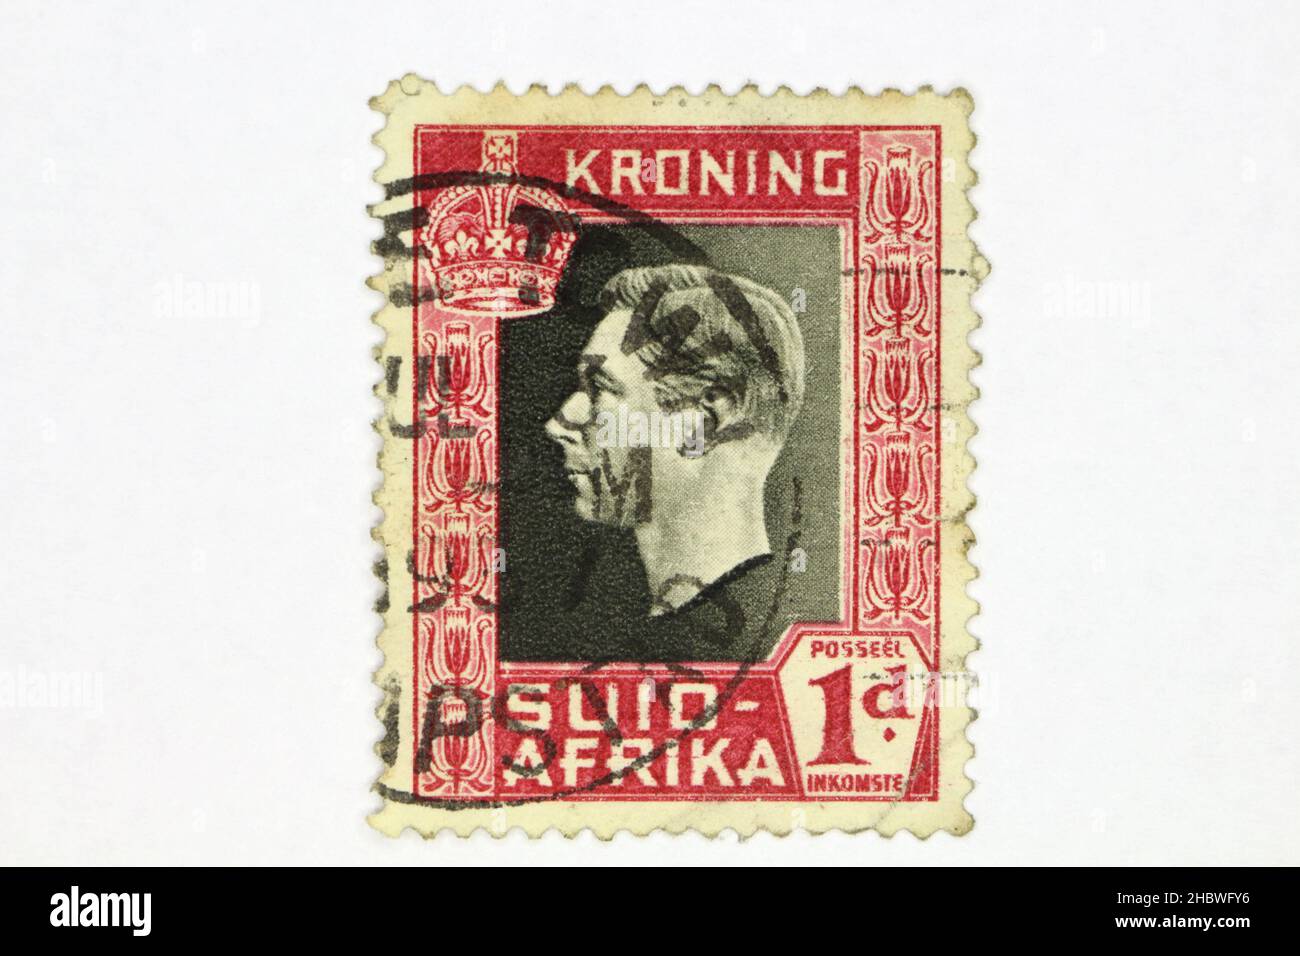 sudáfrica - Suid Afrika sello postal King George VI coronation (kroning) Foto de stock